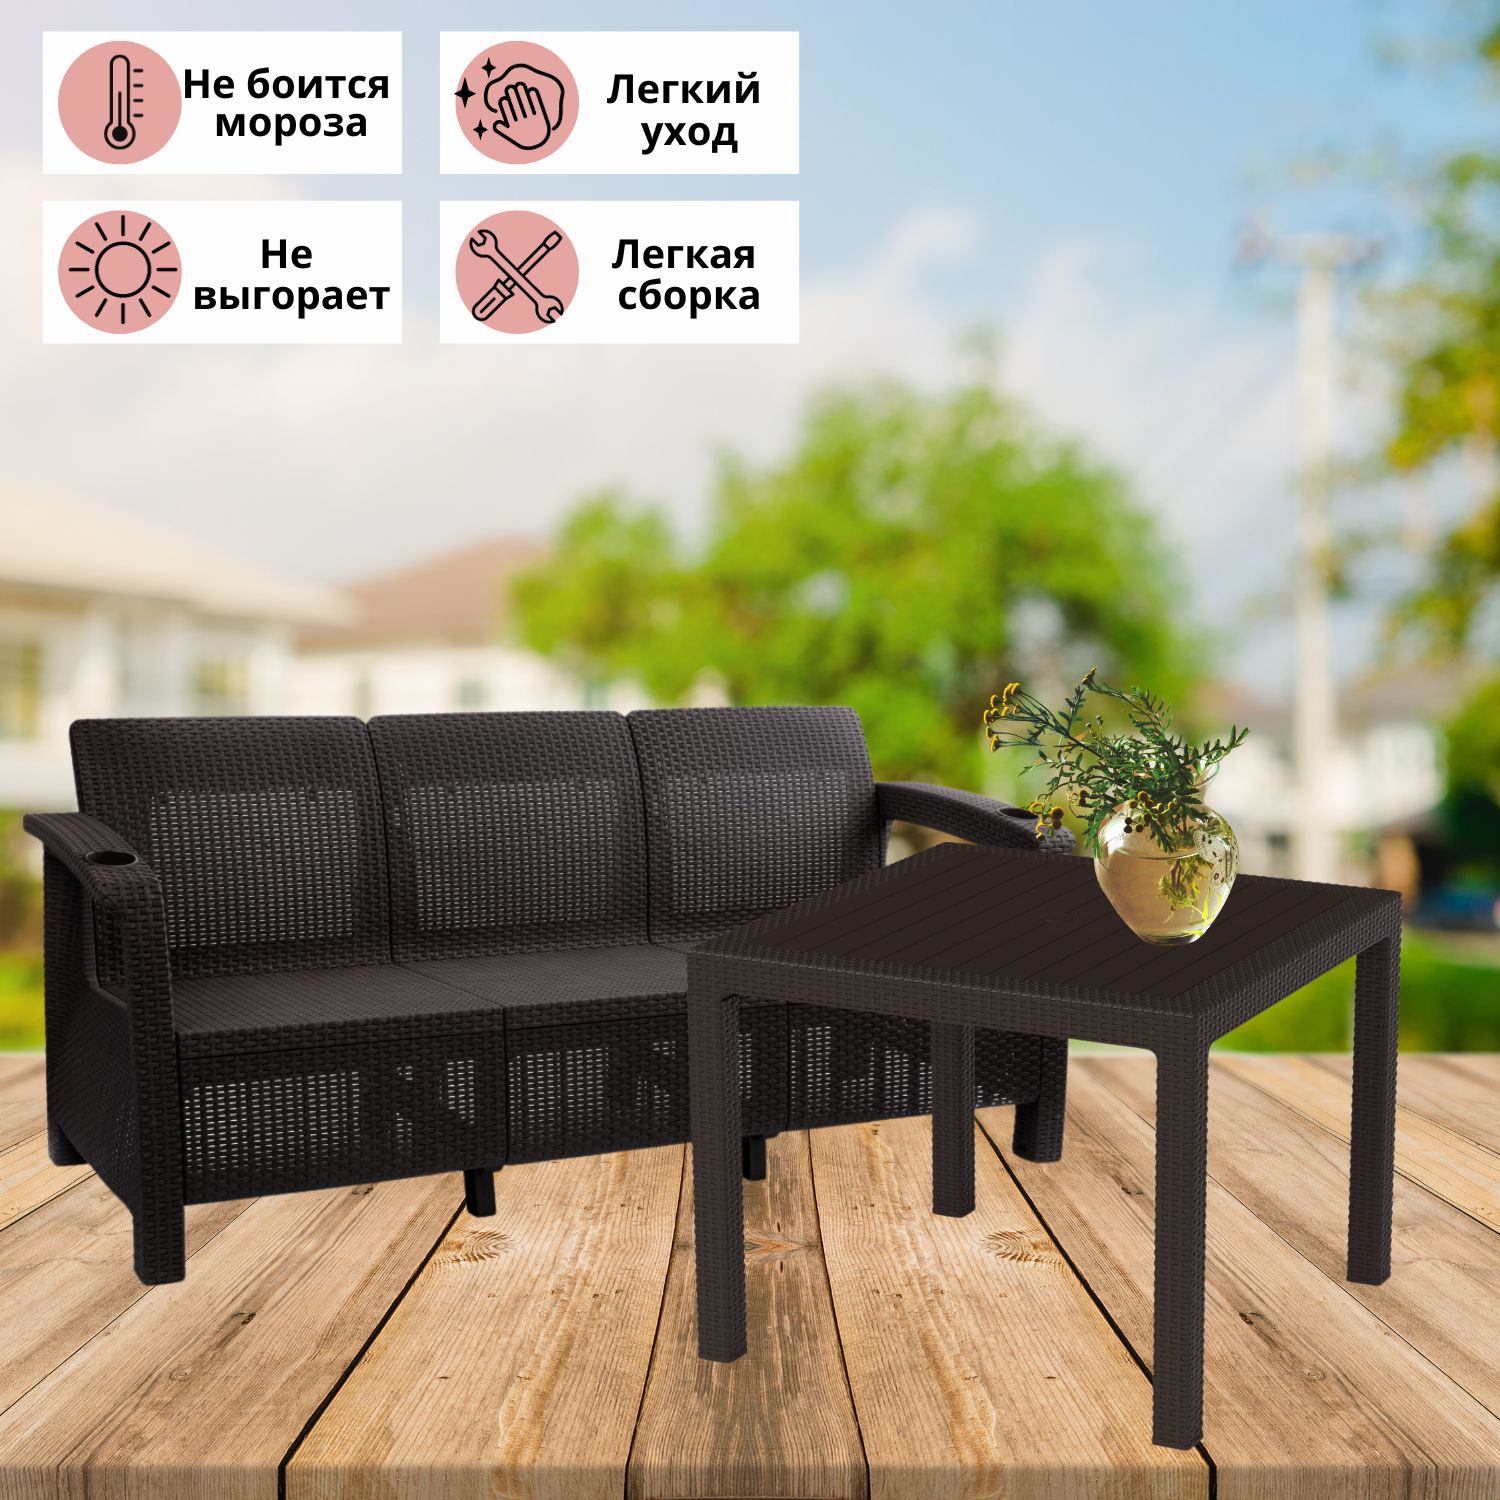 Комплект садовой мебели Альтернатива Фазенда-3 RT0030 коричневый 3-х местный диван+стол